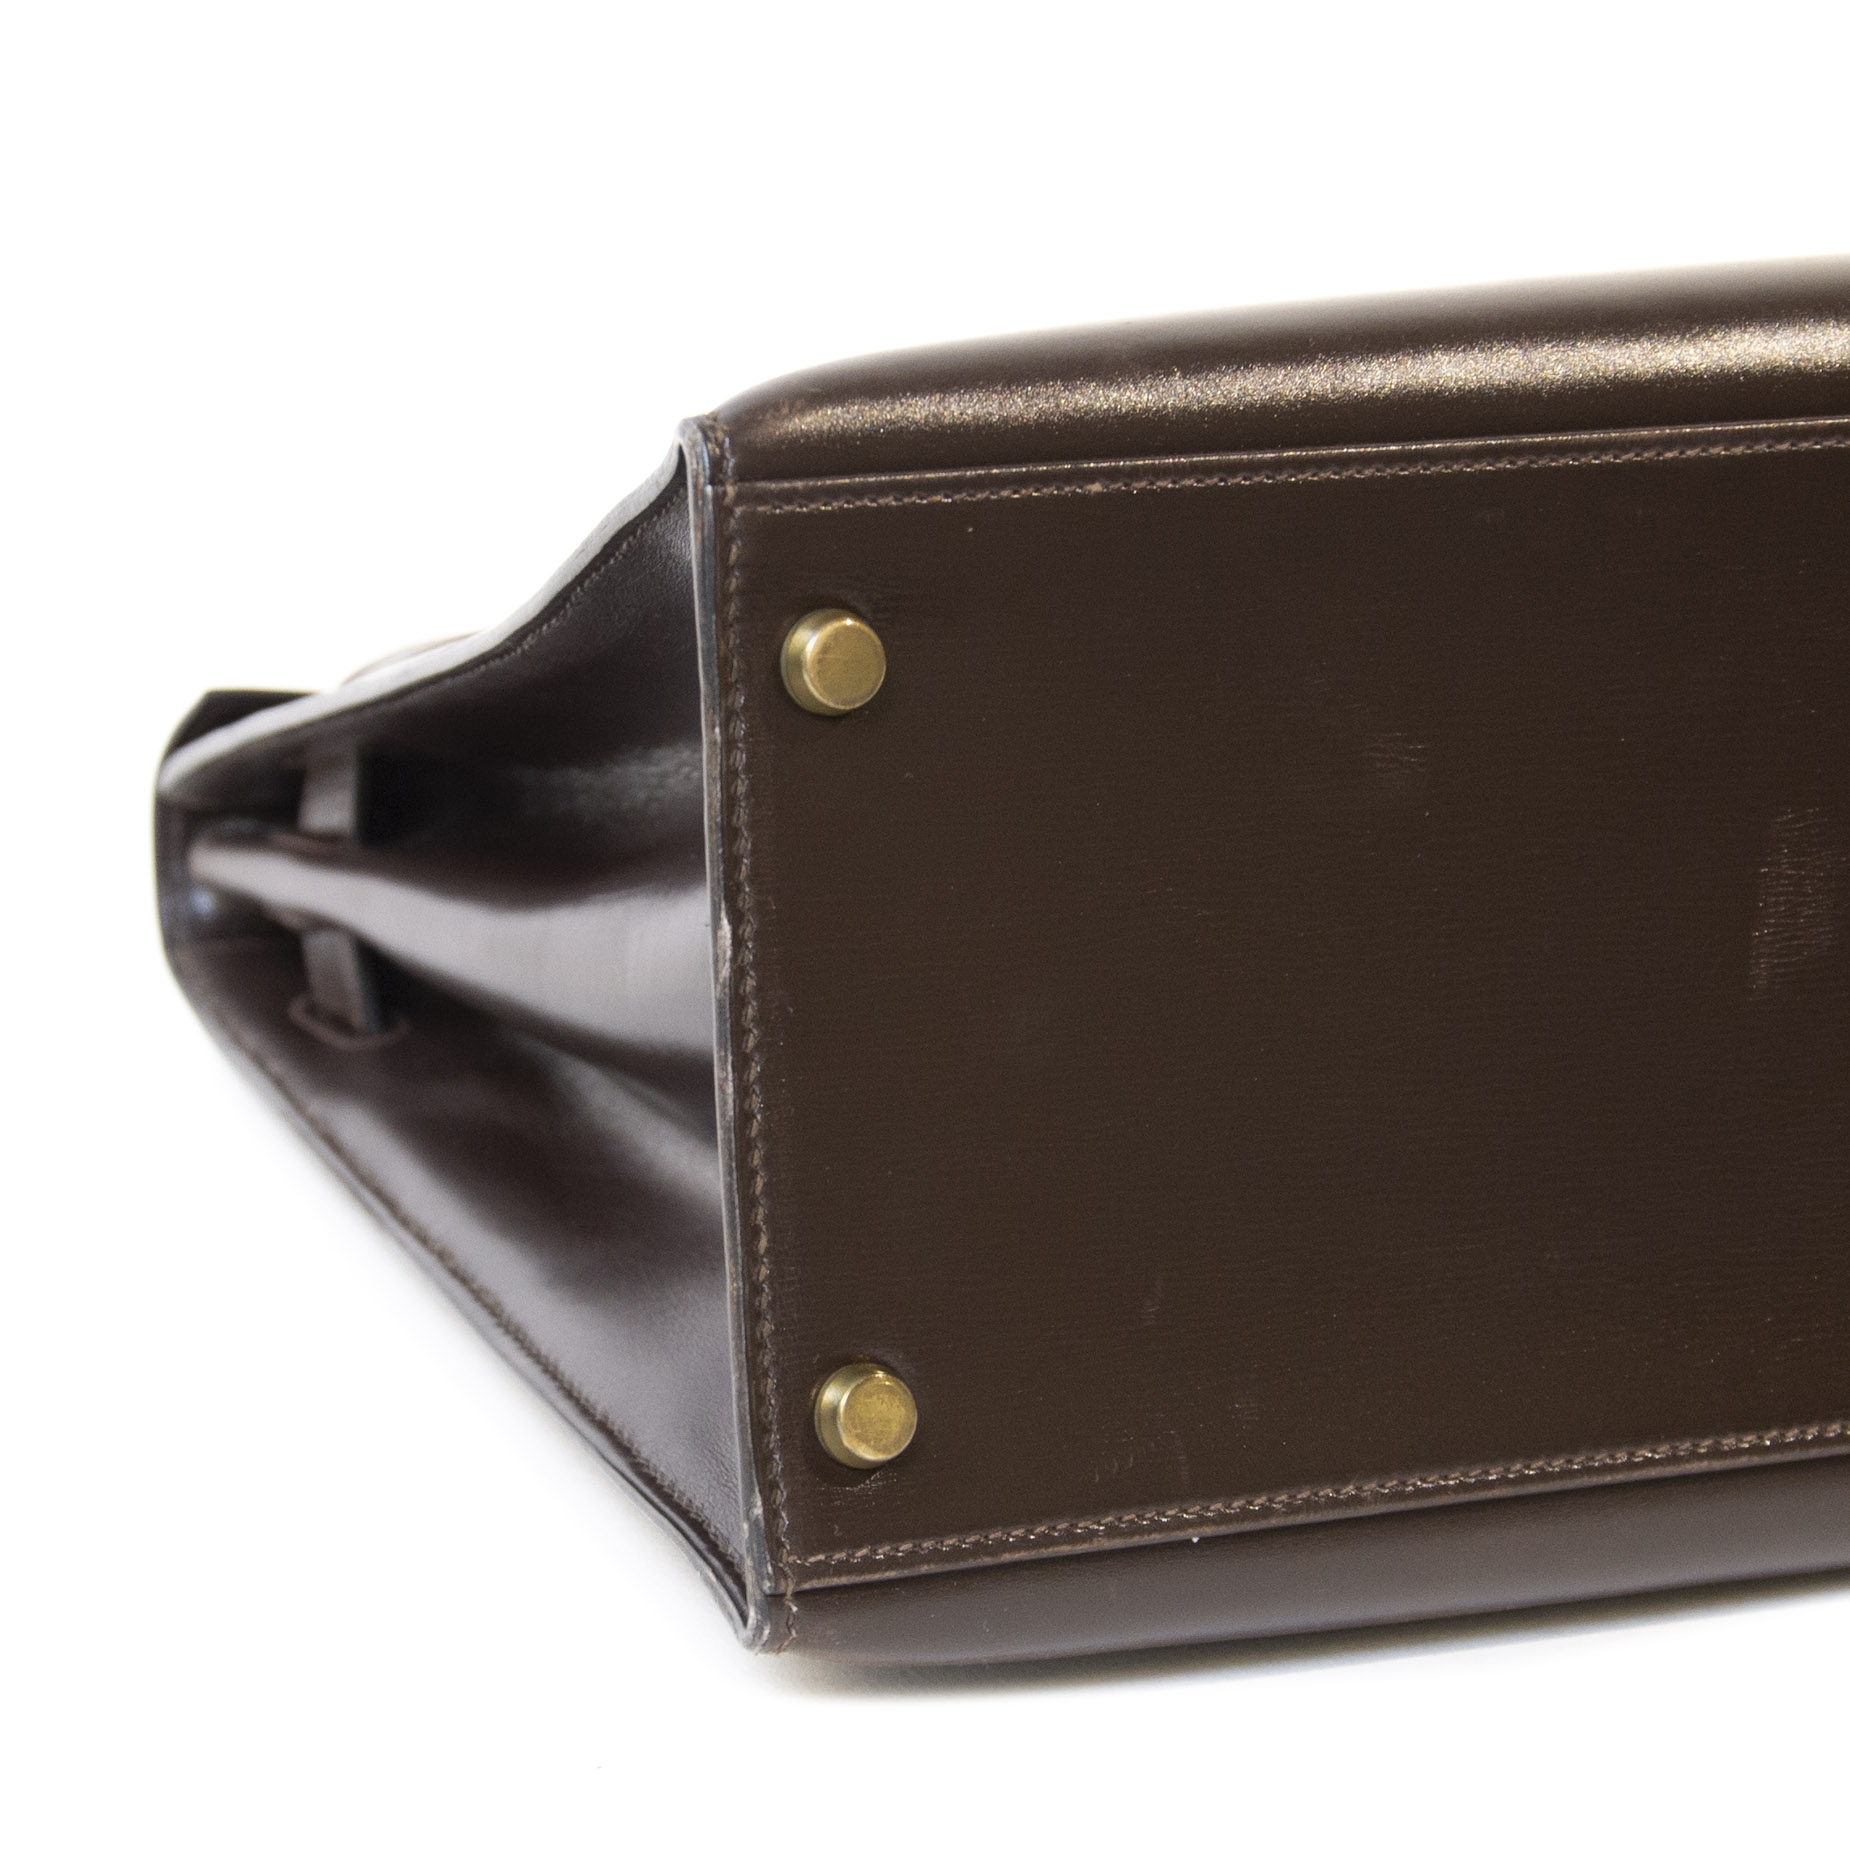 Hermes Brique Box Calf Leather Gold Hardware Kelly Sellier 35 Bag - BOPF